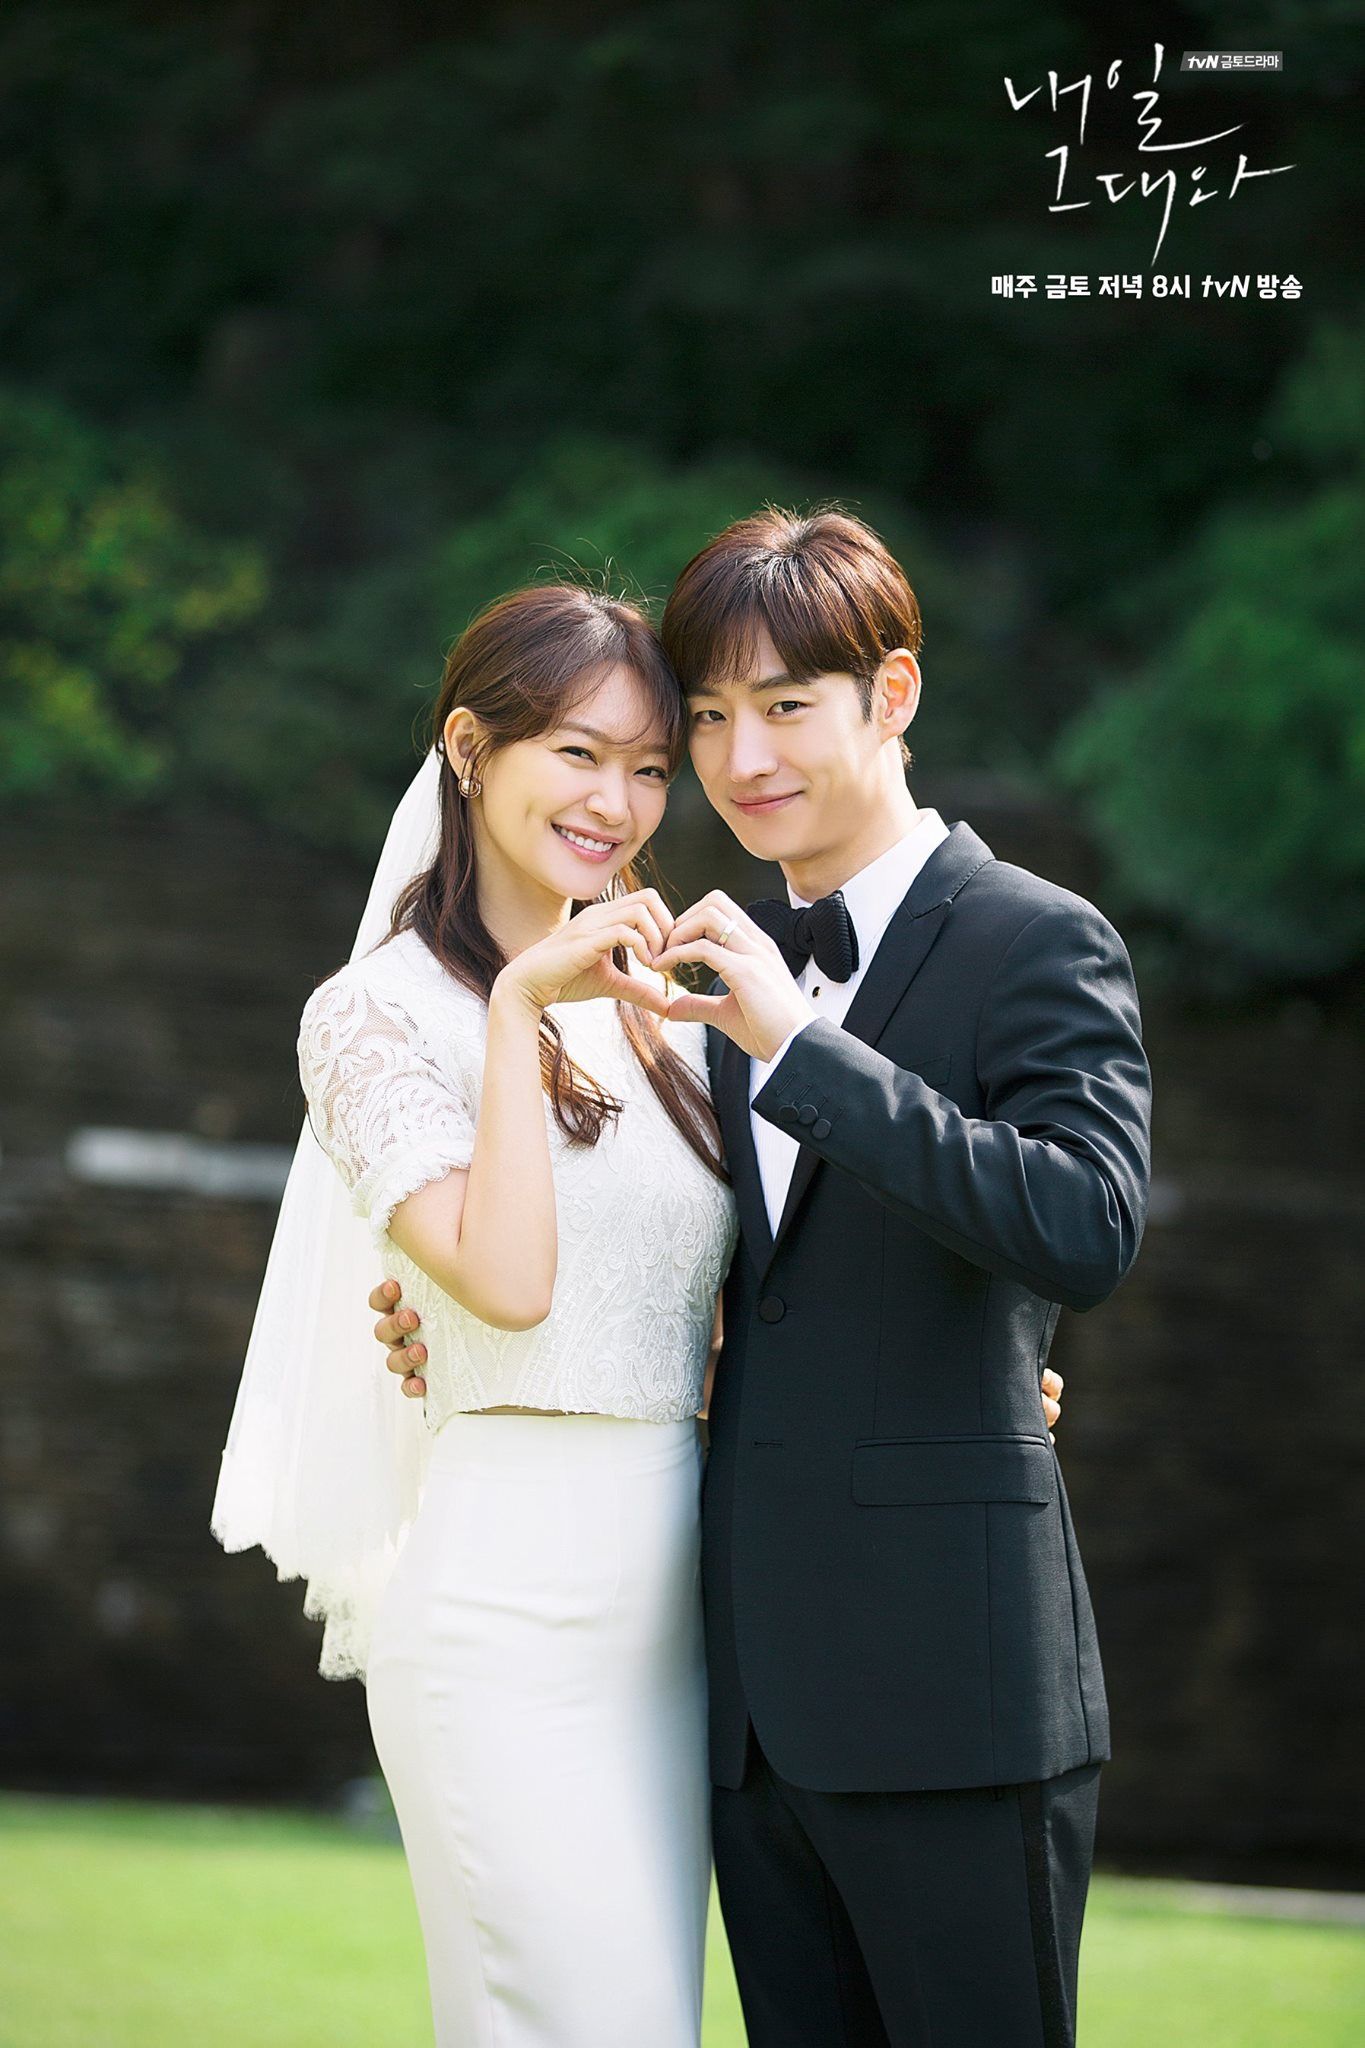 Tomorrow with you drama pre wedding photo. Tomorrow with you, Tomorrow with you kdrama, Korean wedding